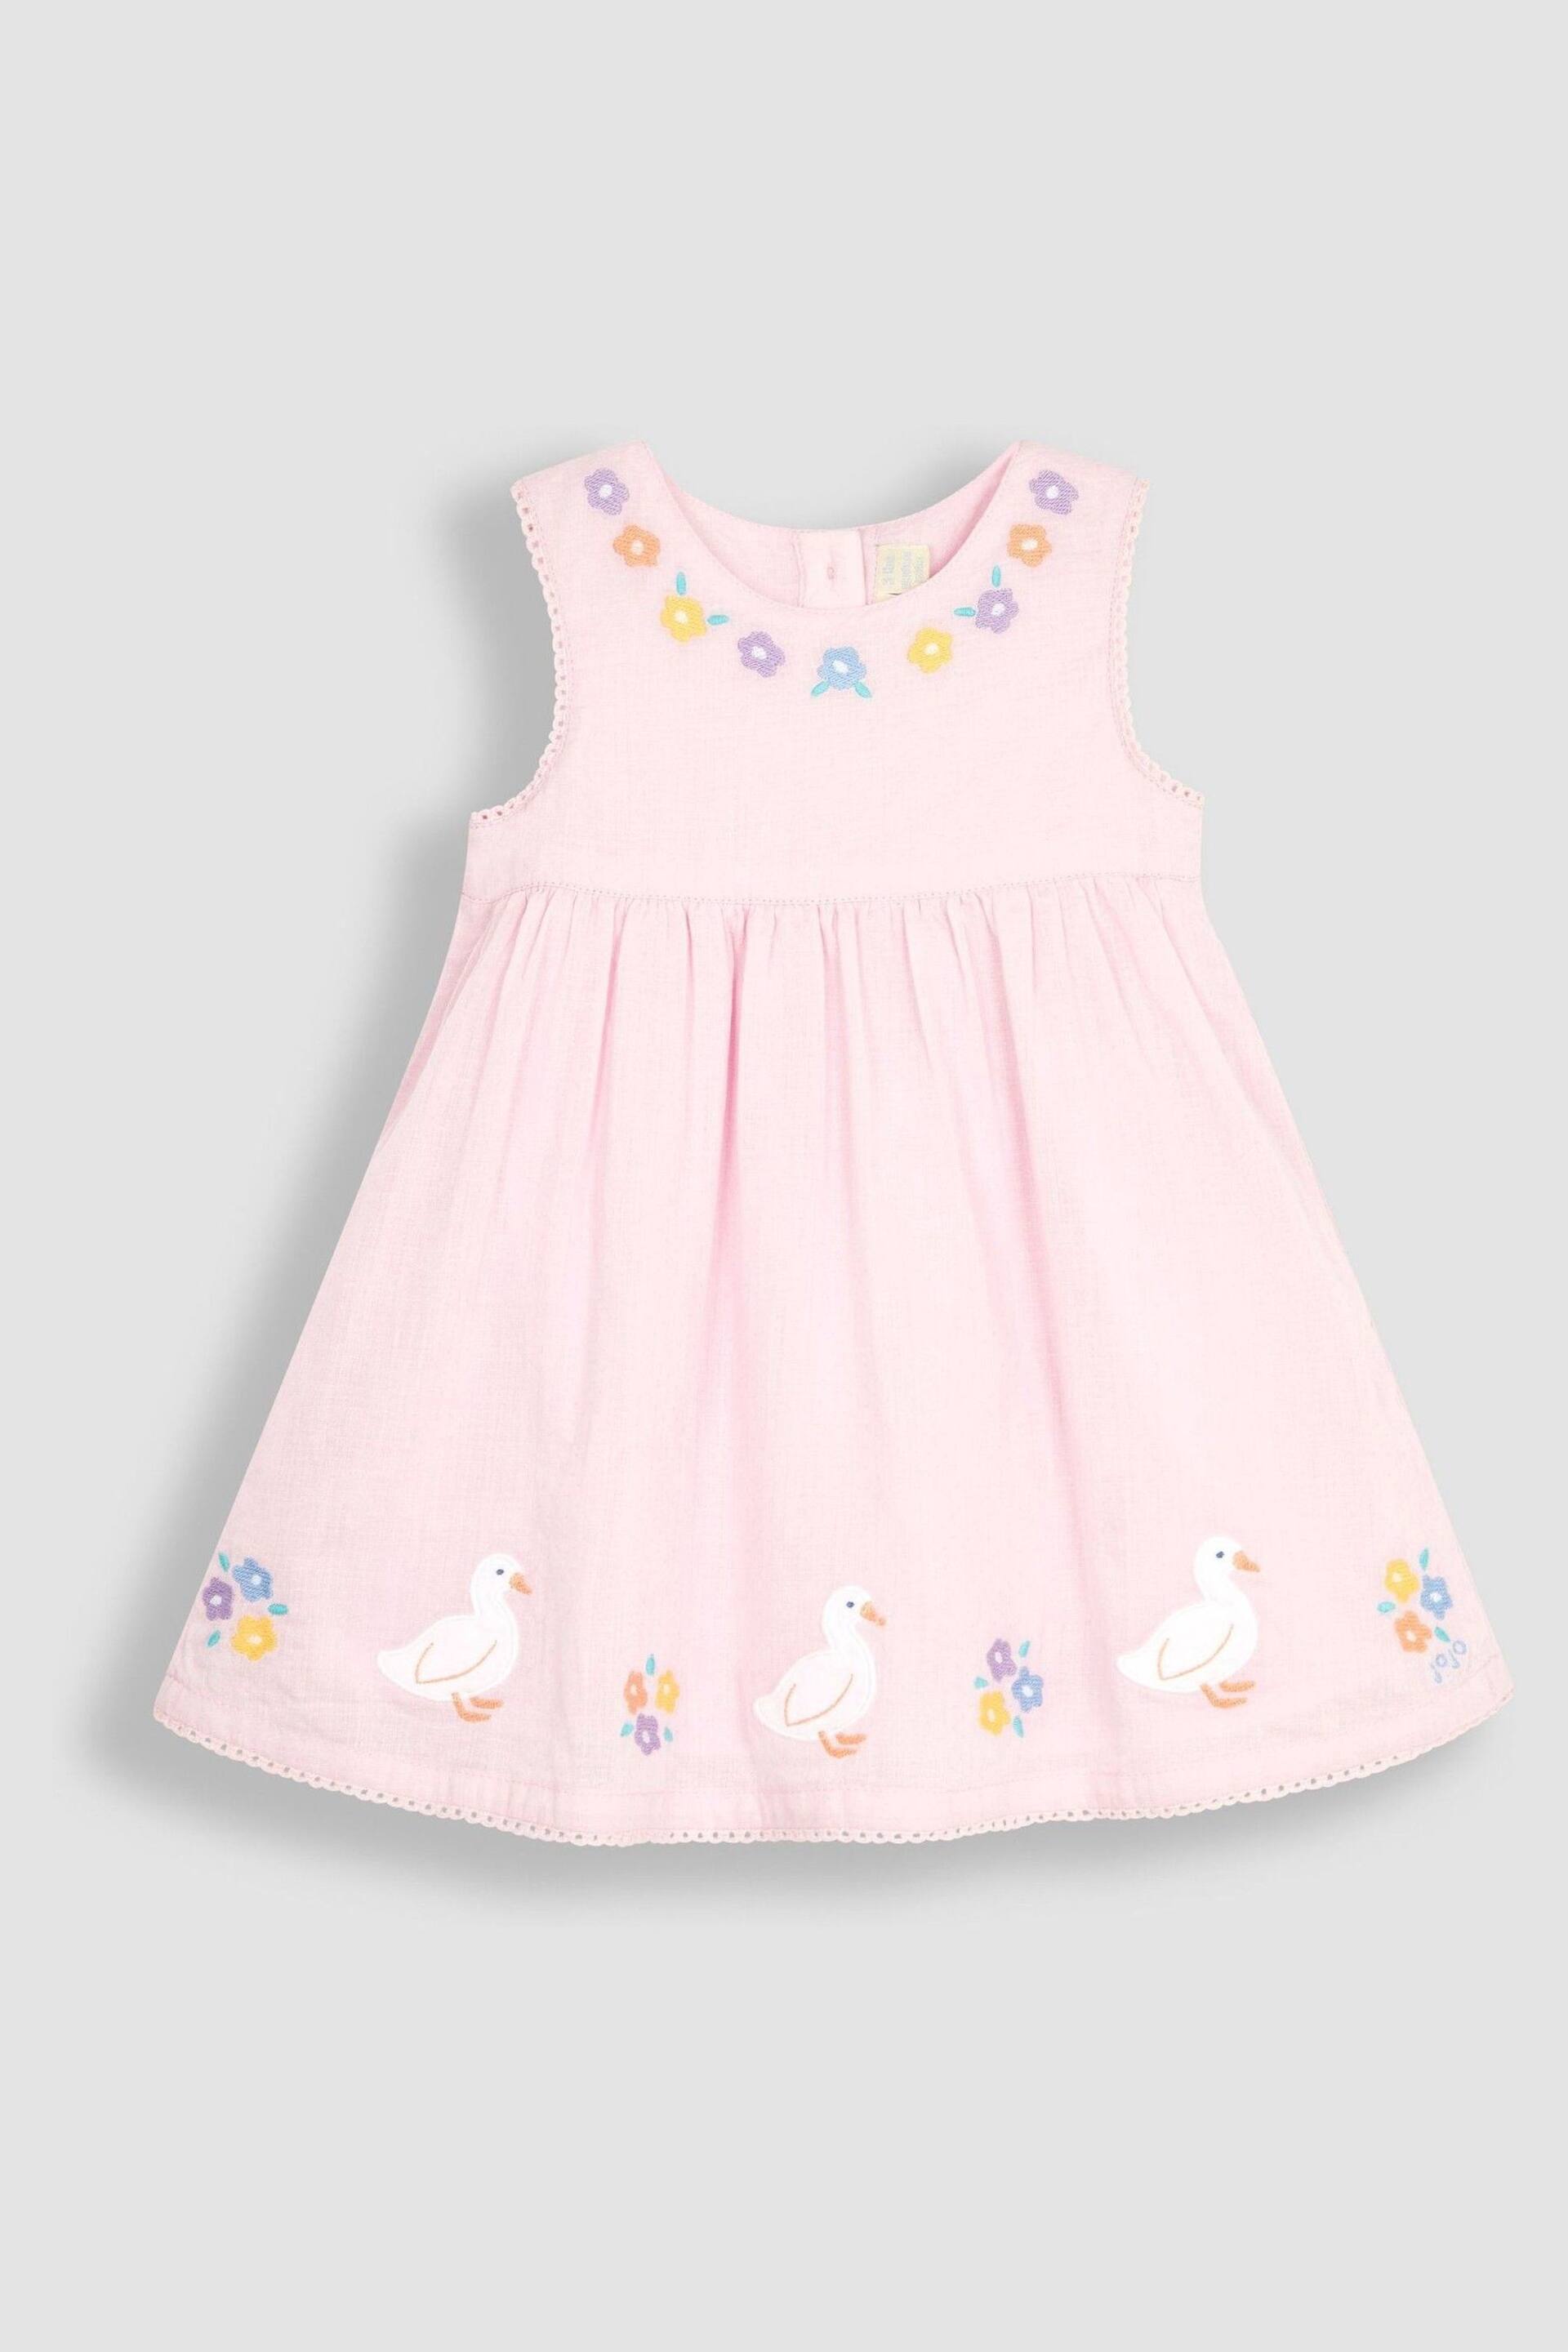 JoJo Maman Bébé Pink Duck Embroidered Baby Dress - Image 2 of 4